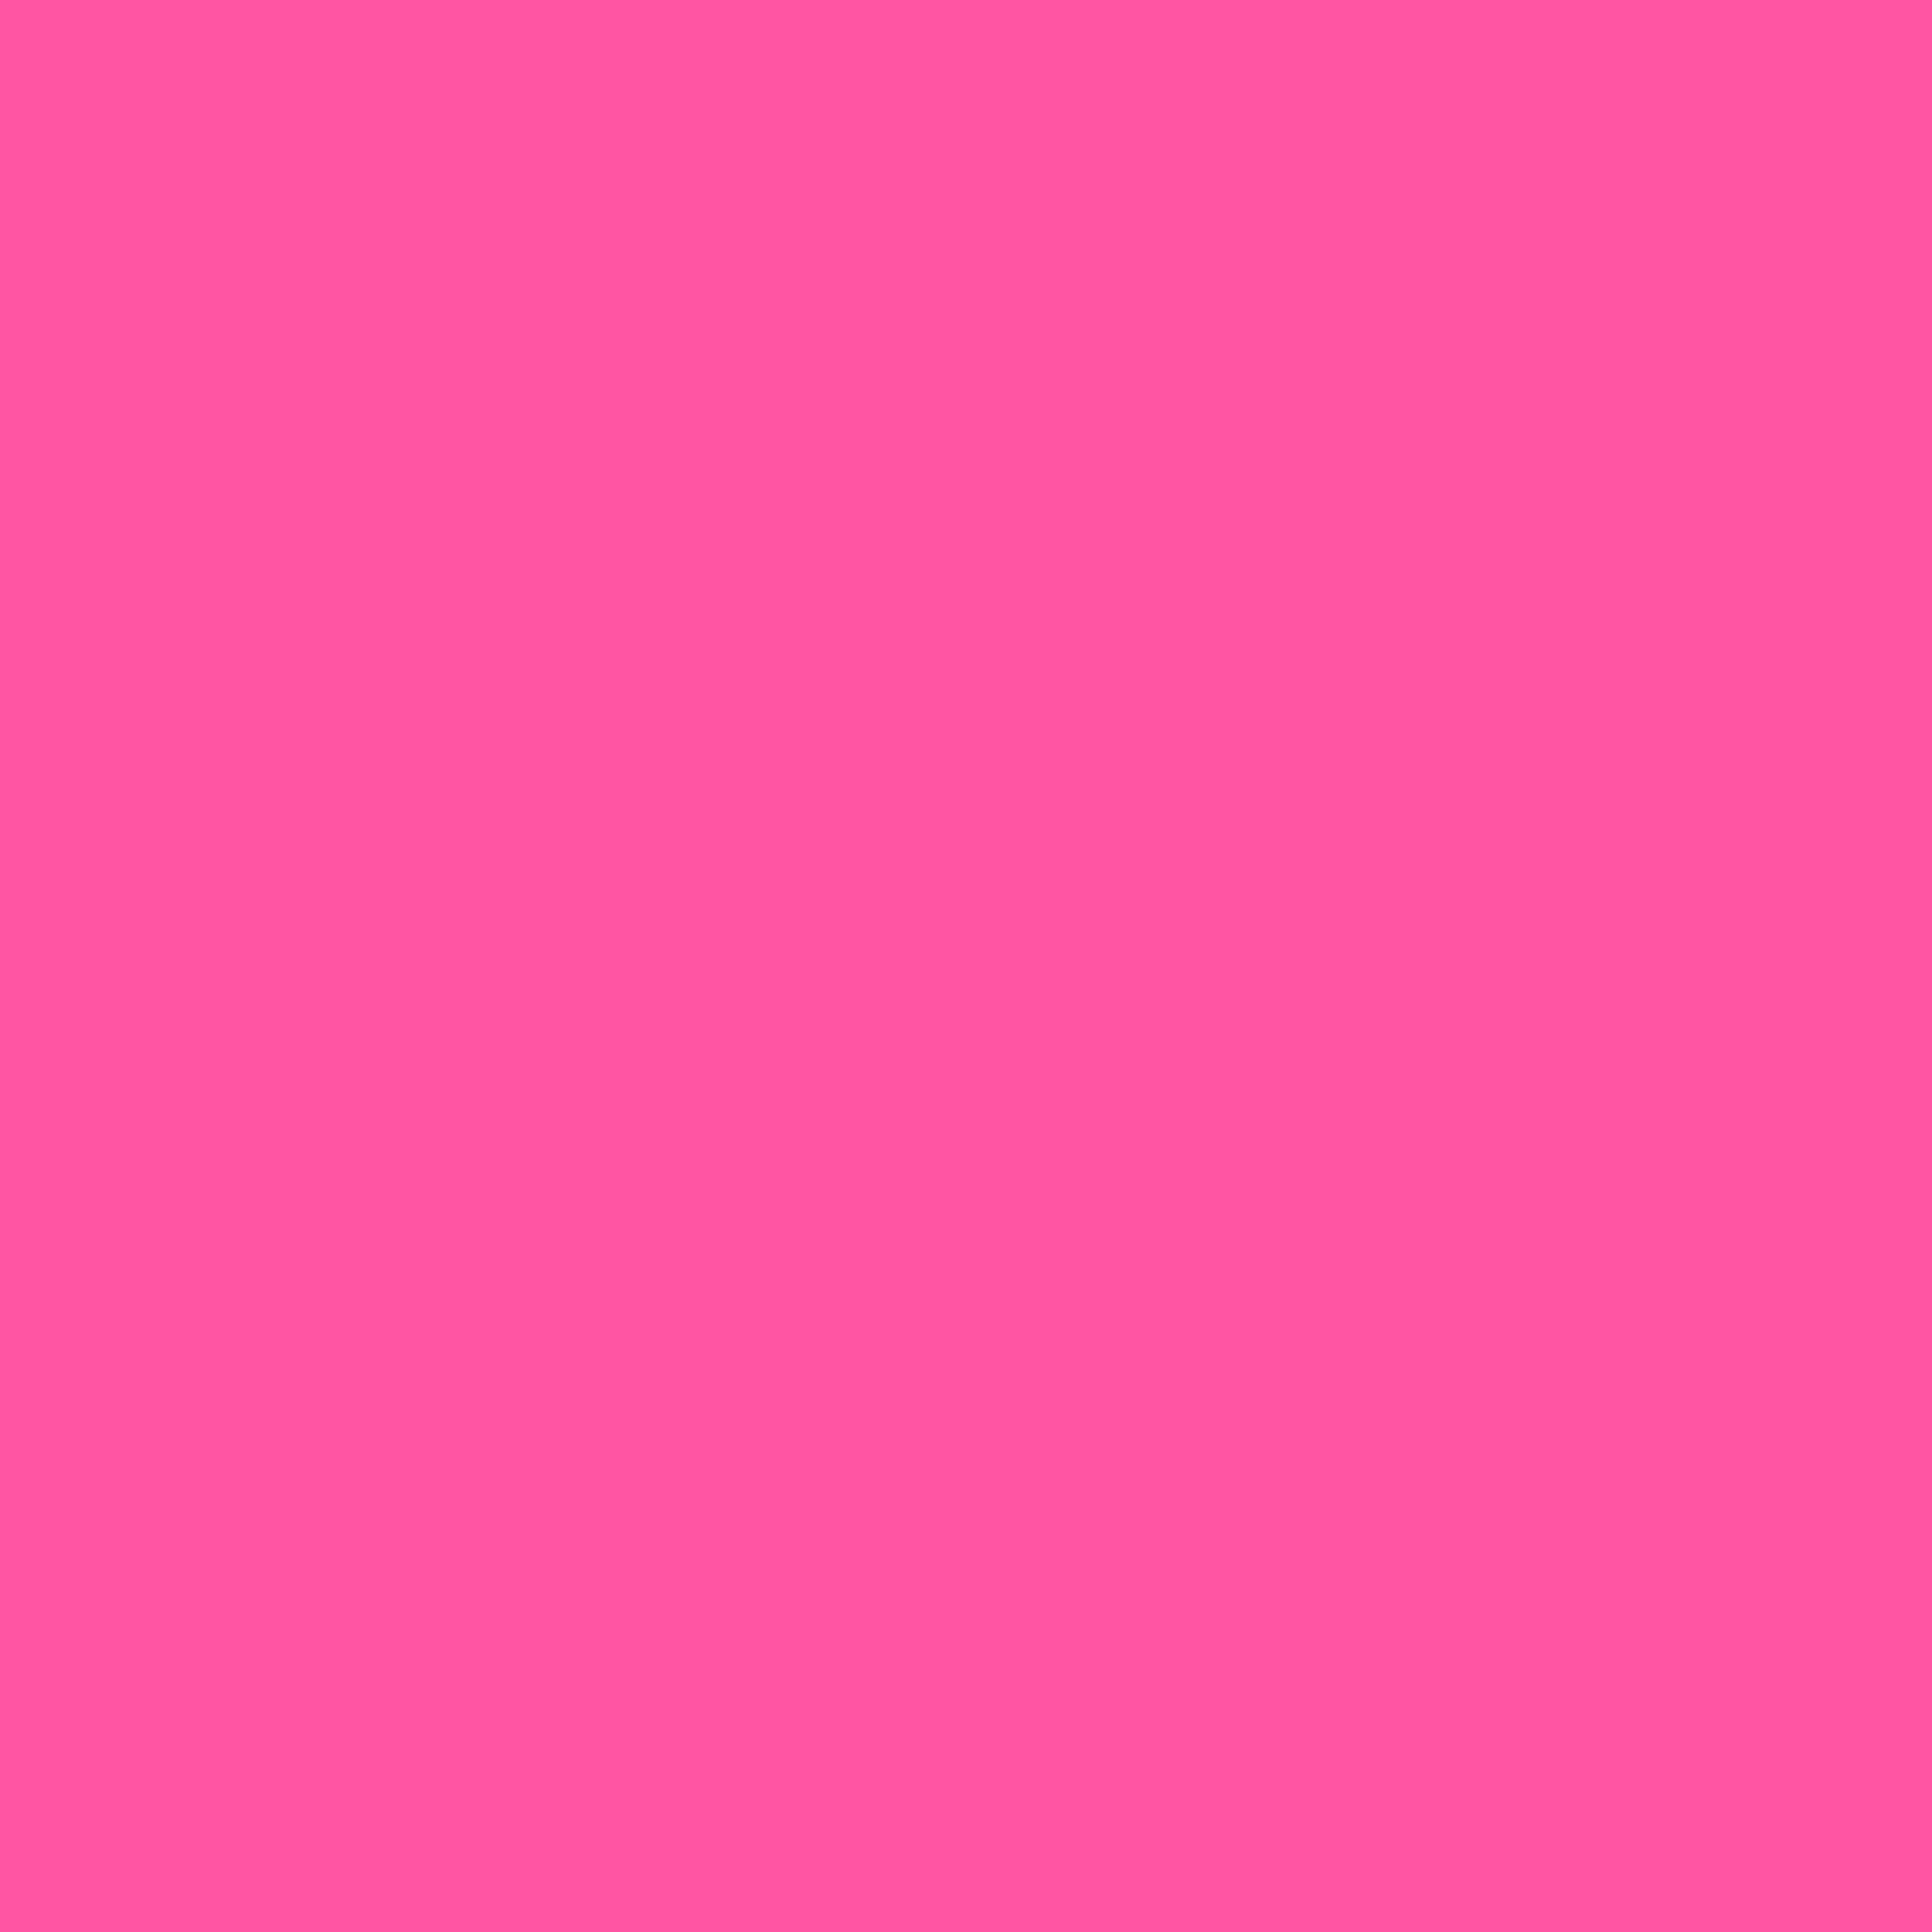 3600x3600 Brilliant Rose Solid Color Background